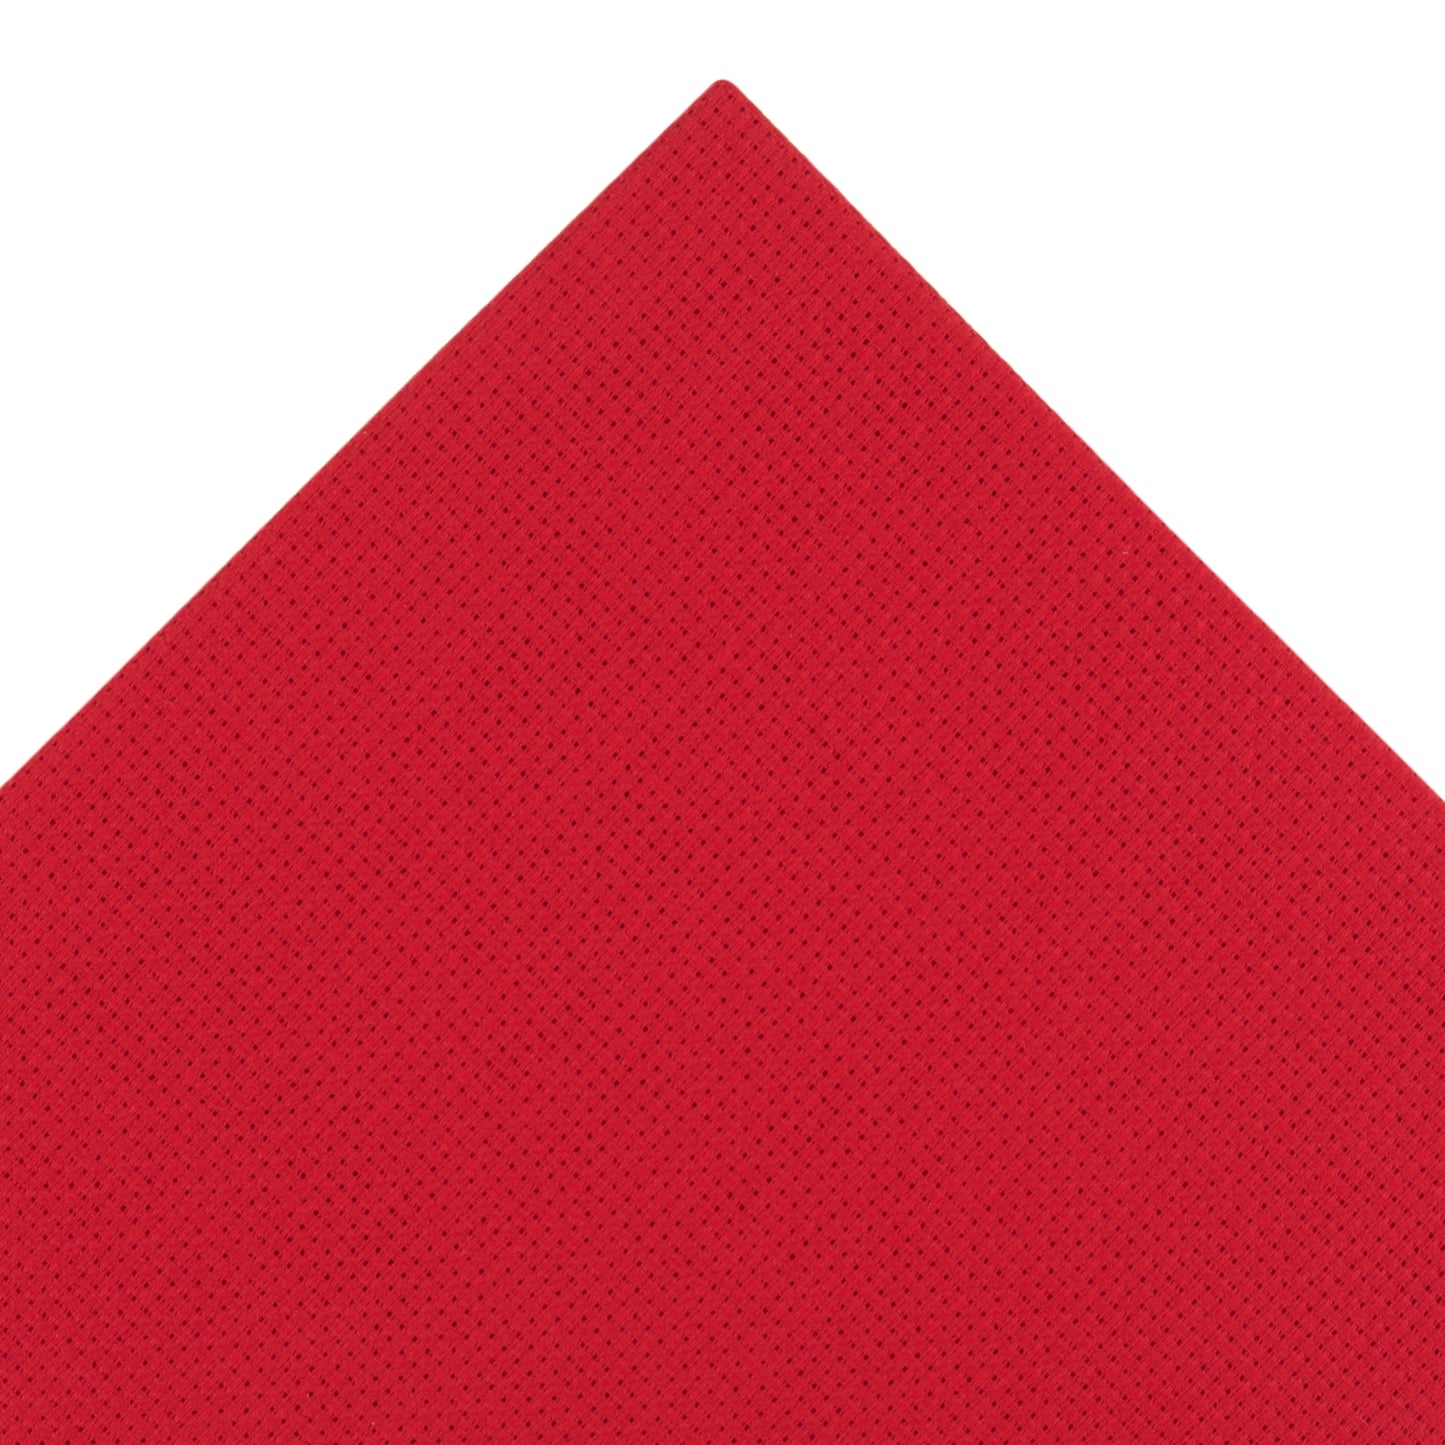 Needlecraft Fabric: Aida: 14 Count: 45 x 30cm: Red